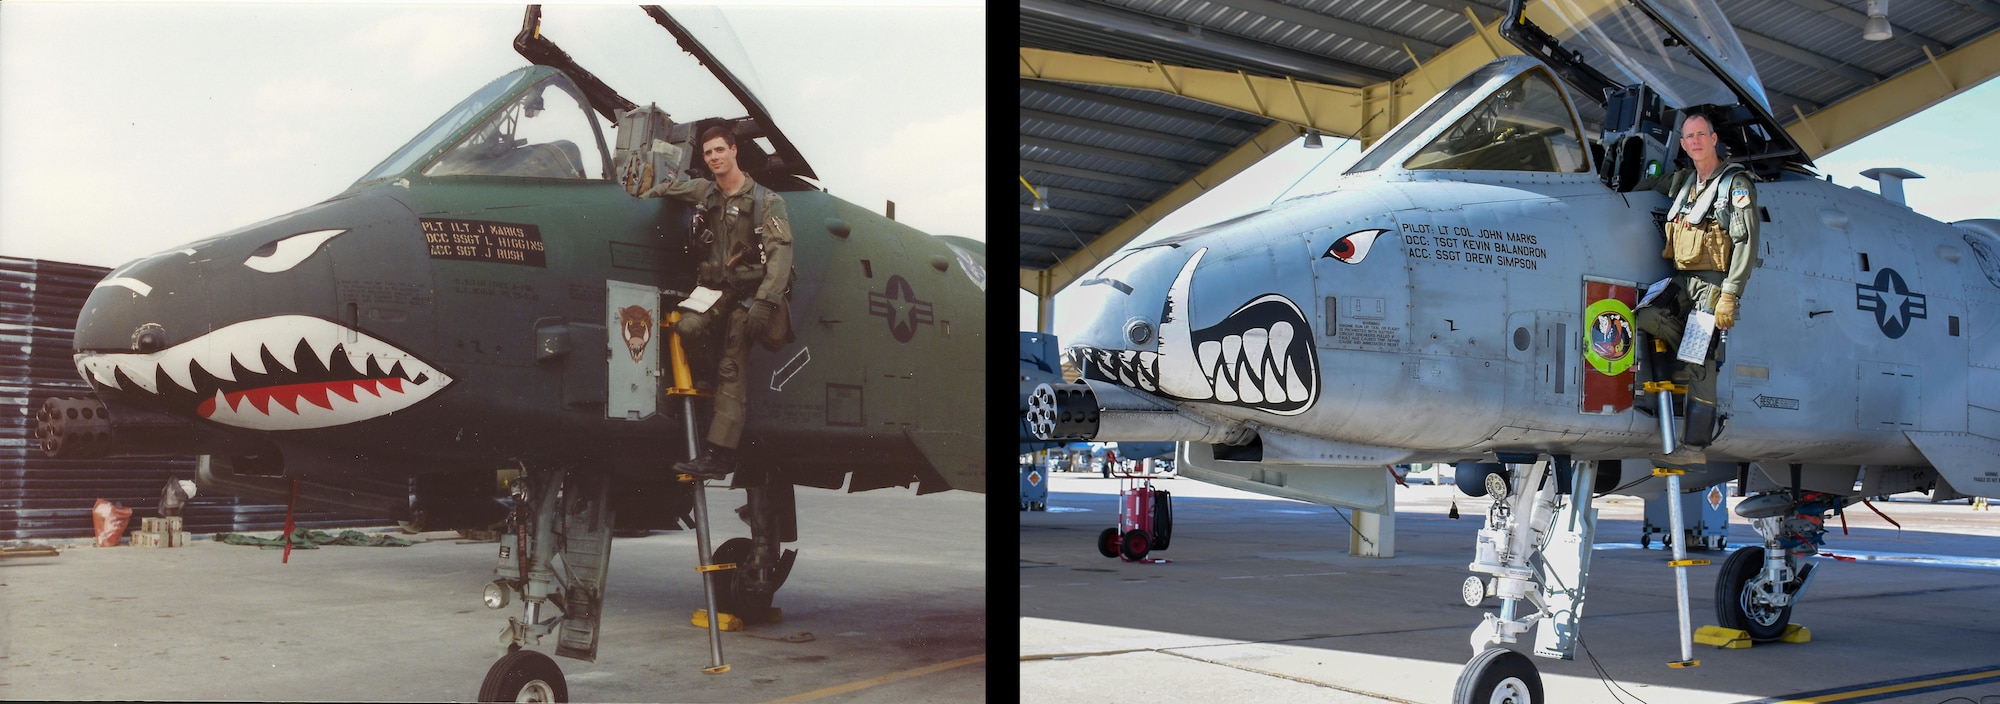 U.S. Air Force 1st Lt. John “Karl” Marks poses with an A-10 Thunderbolt II at King Fahd Air Base, Saudi Arabia, during Operation Desert Storm on February 28, 1991 next to now, Lt. Col. Marks poses with A-10 Thunderbolt II, nearly 30 years later at Whiteman Air Force Base, Mo., Feb. 22 2021.